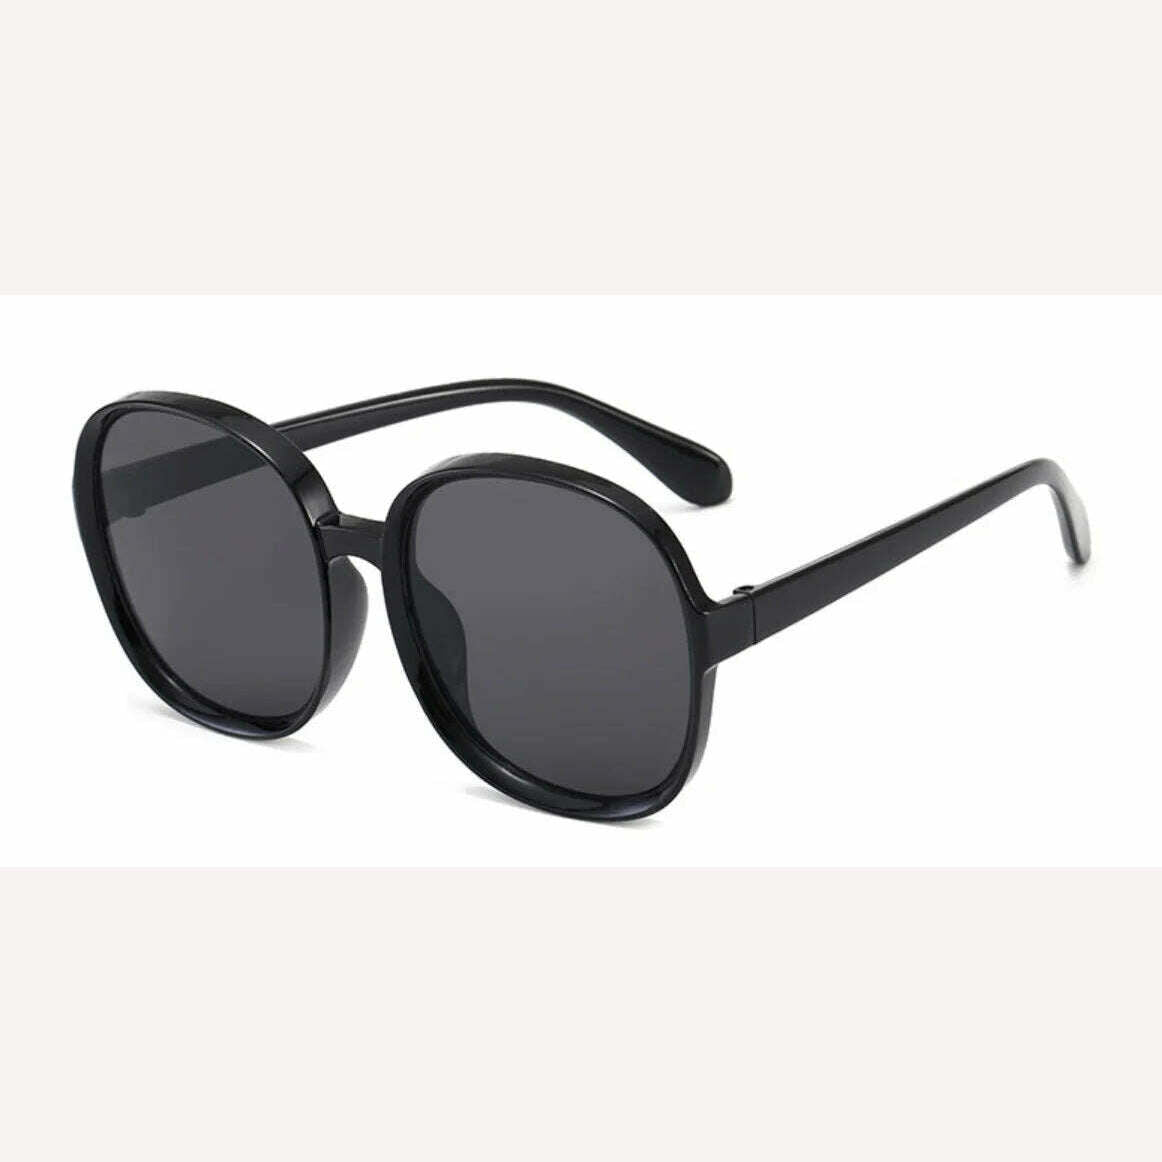 KIMLUD, 2021 Plastic Classic Vintage Woman Sunglasses Oversized Round Frame Luxury Brand Designer Female Glasses Big Shades Oculos, Black Gray, KIMLUD Women's Clothes